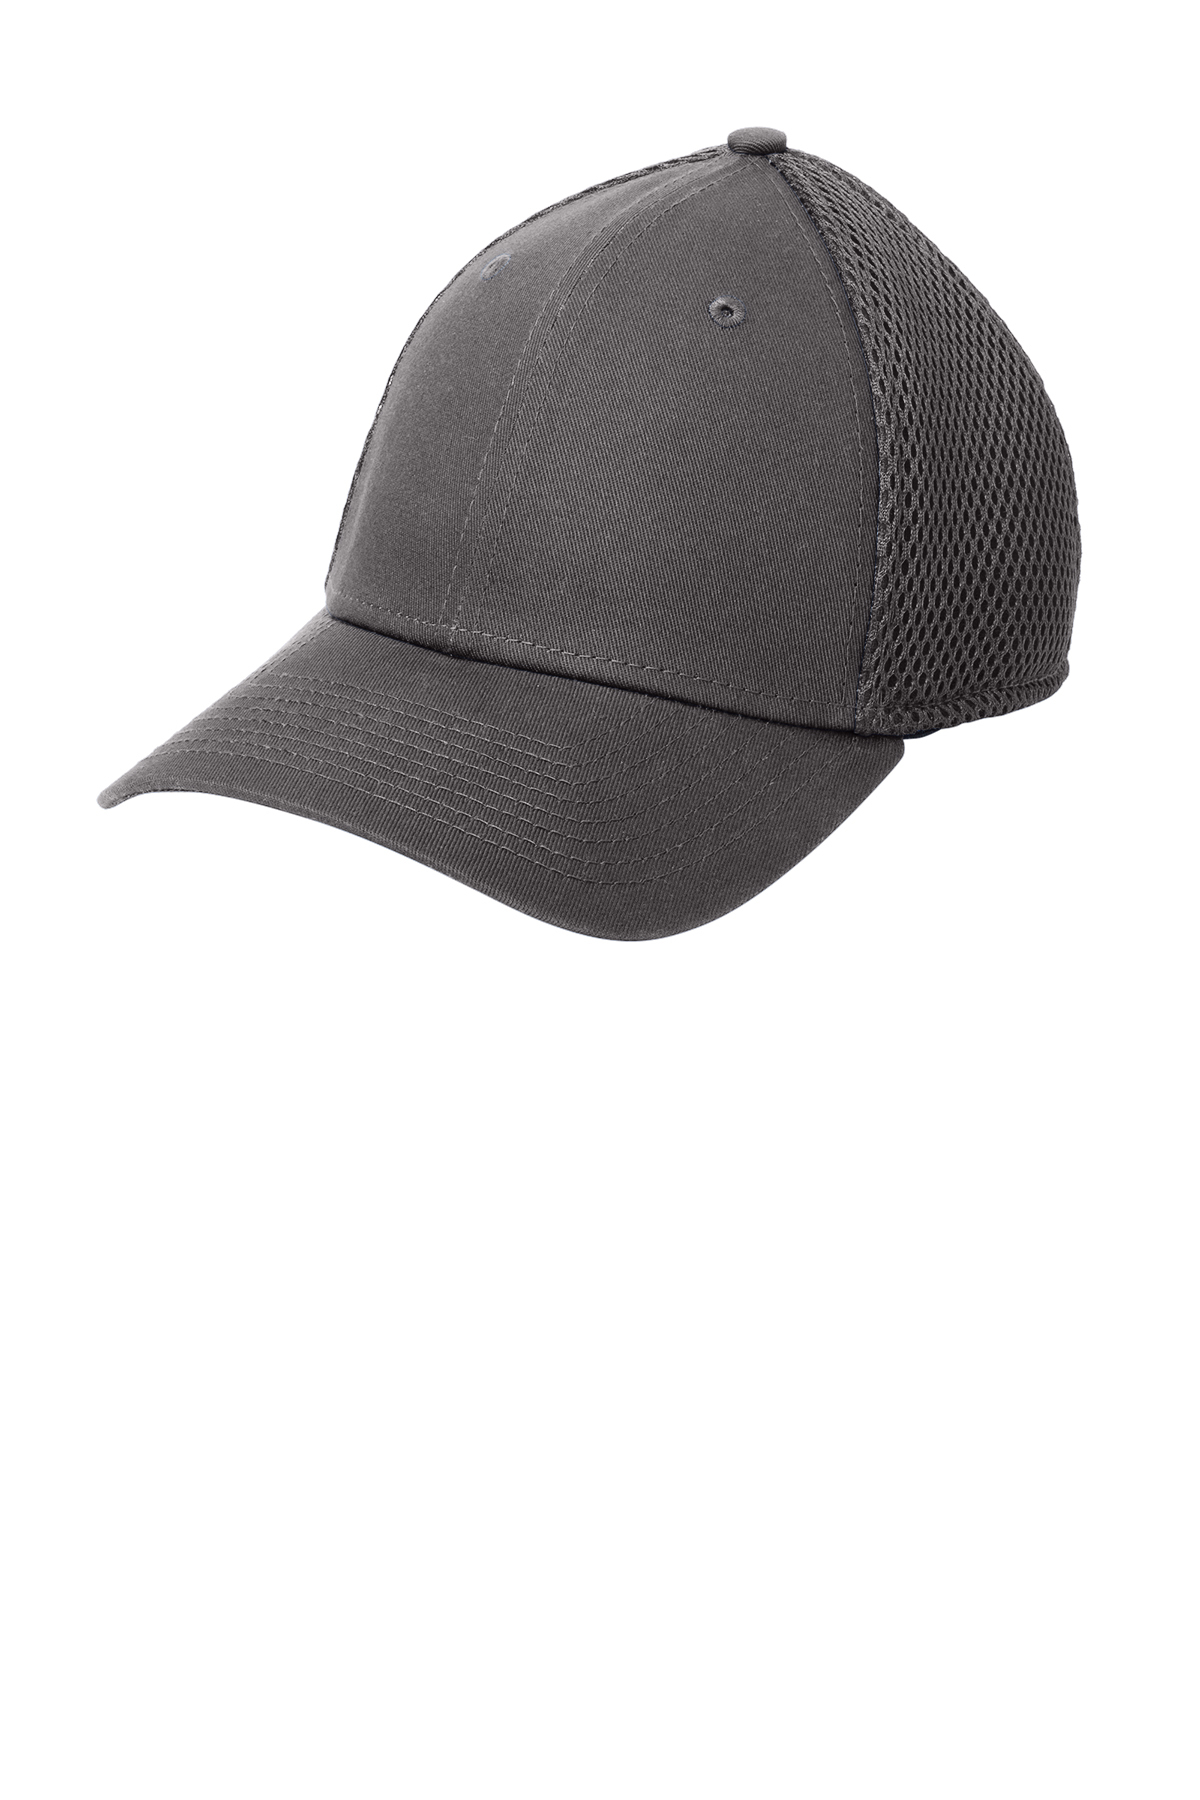 New Era - Stretch Mesh Cap, Product